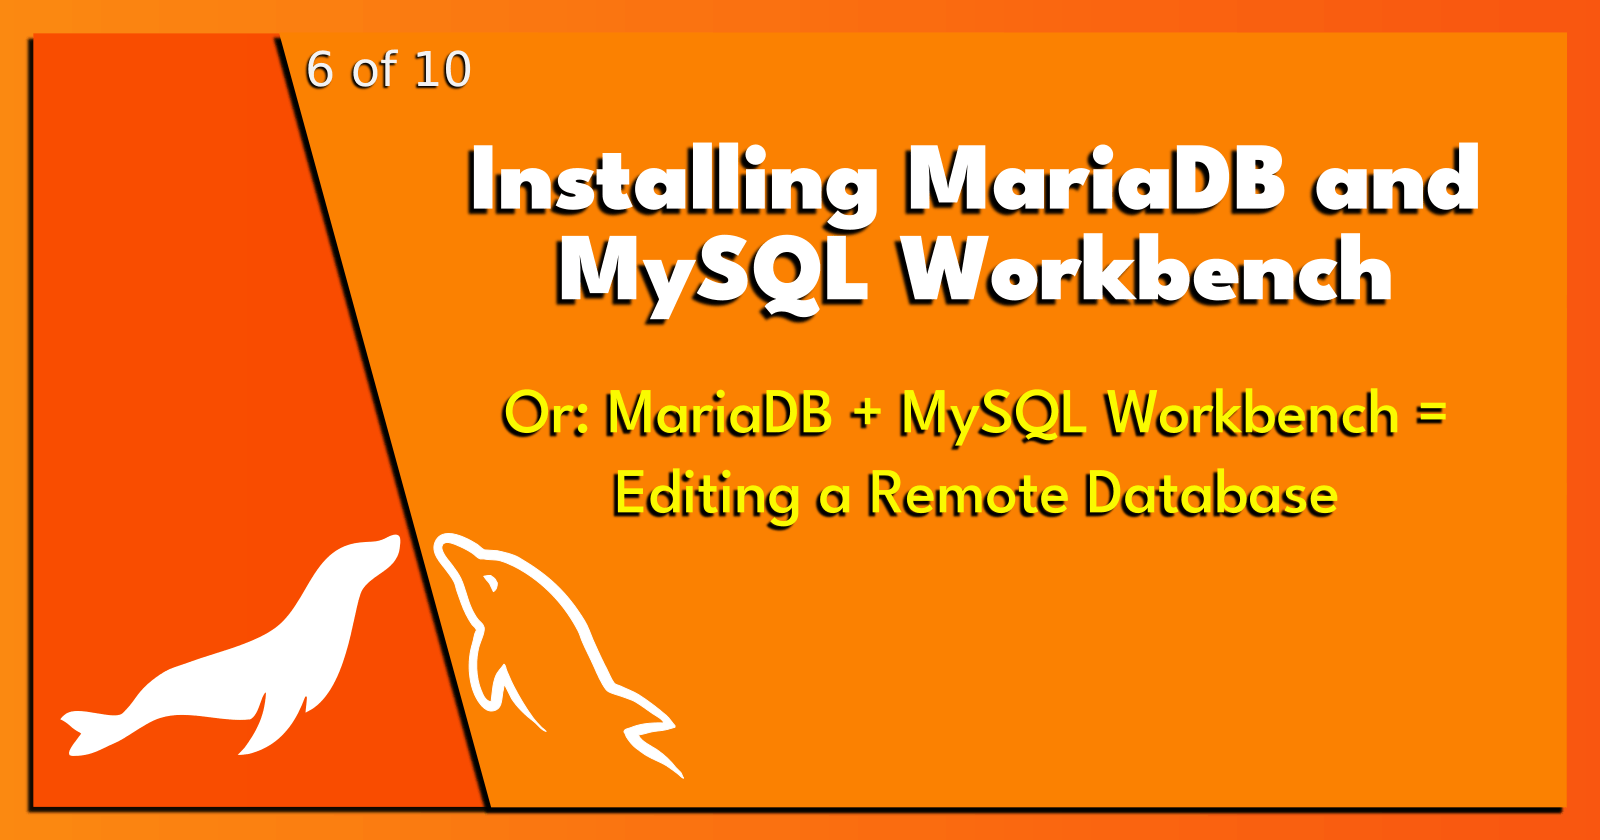 6 of 10: Installing MariaDB and MySQL Workbench.